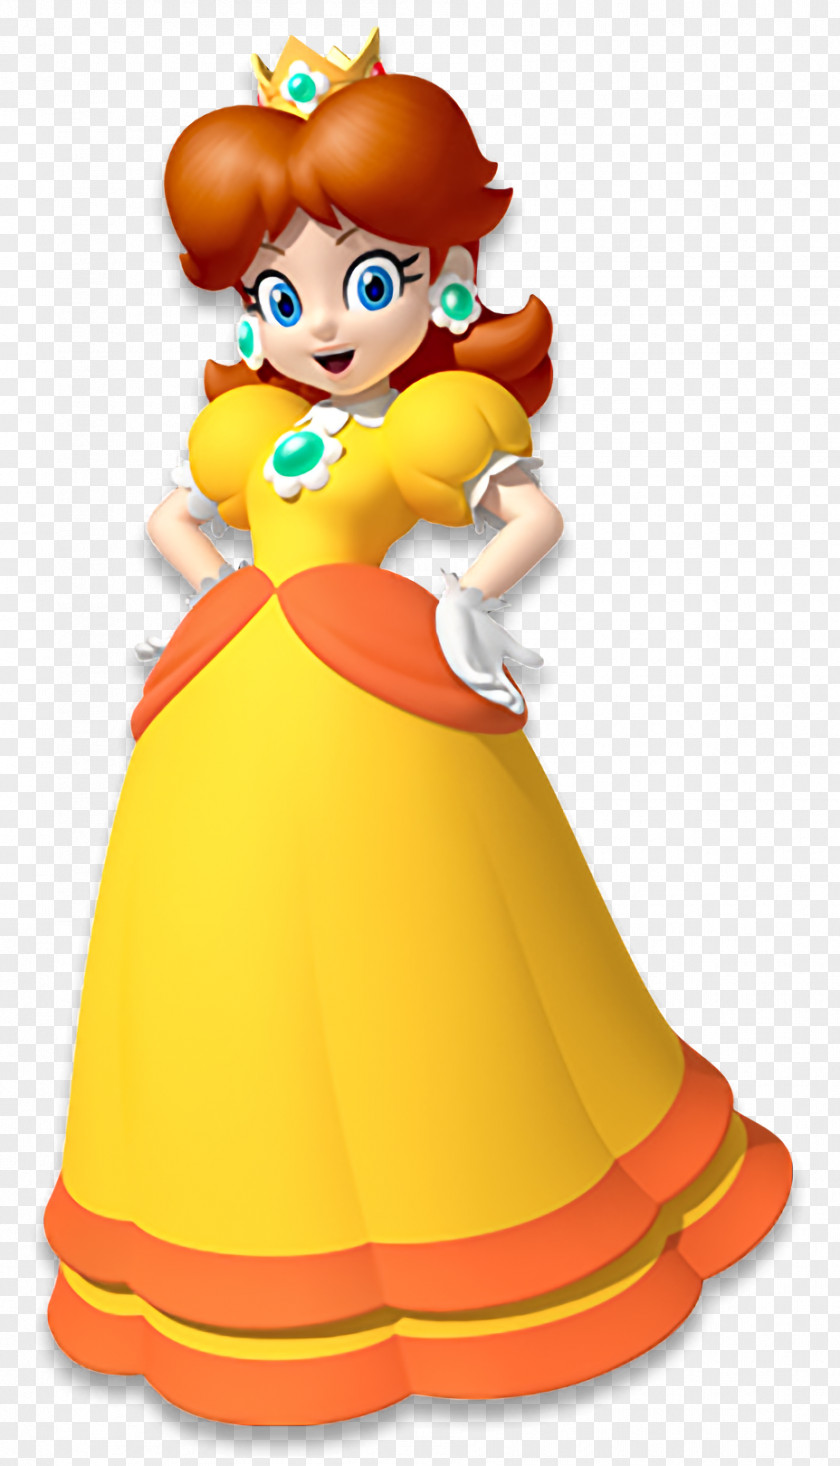 Mario Super Bros. Princess Daisy Peach PNG